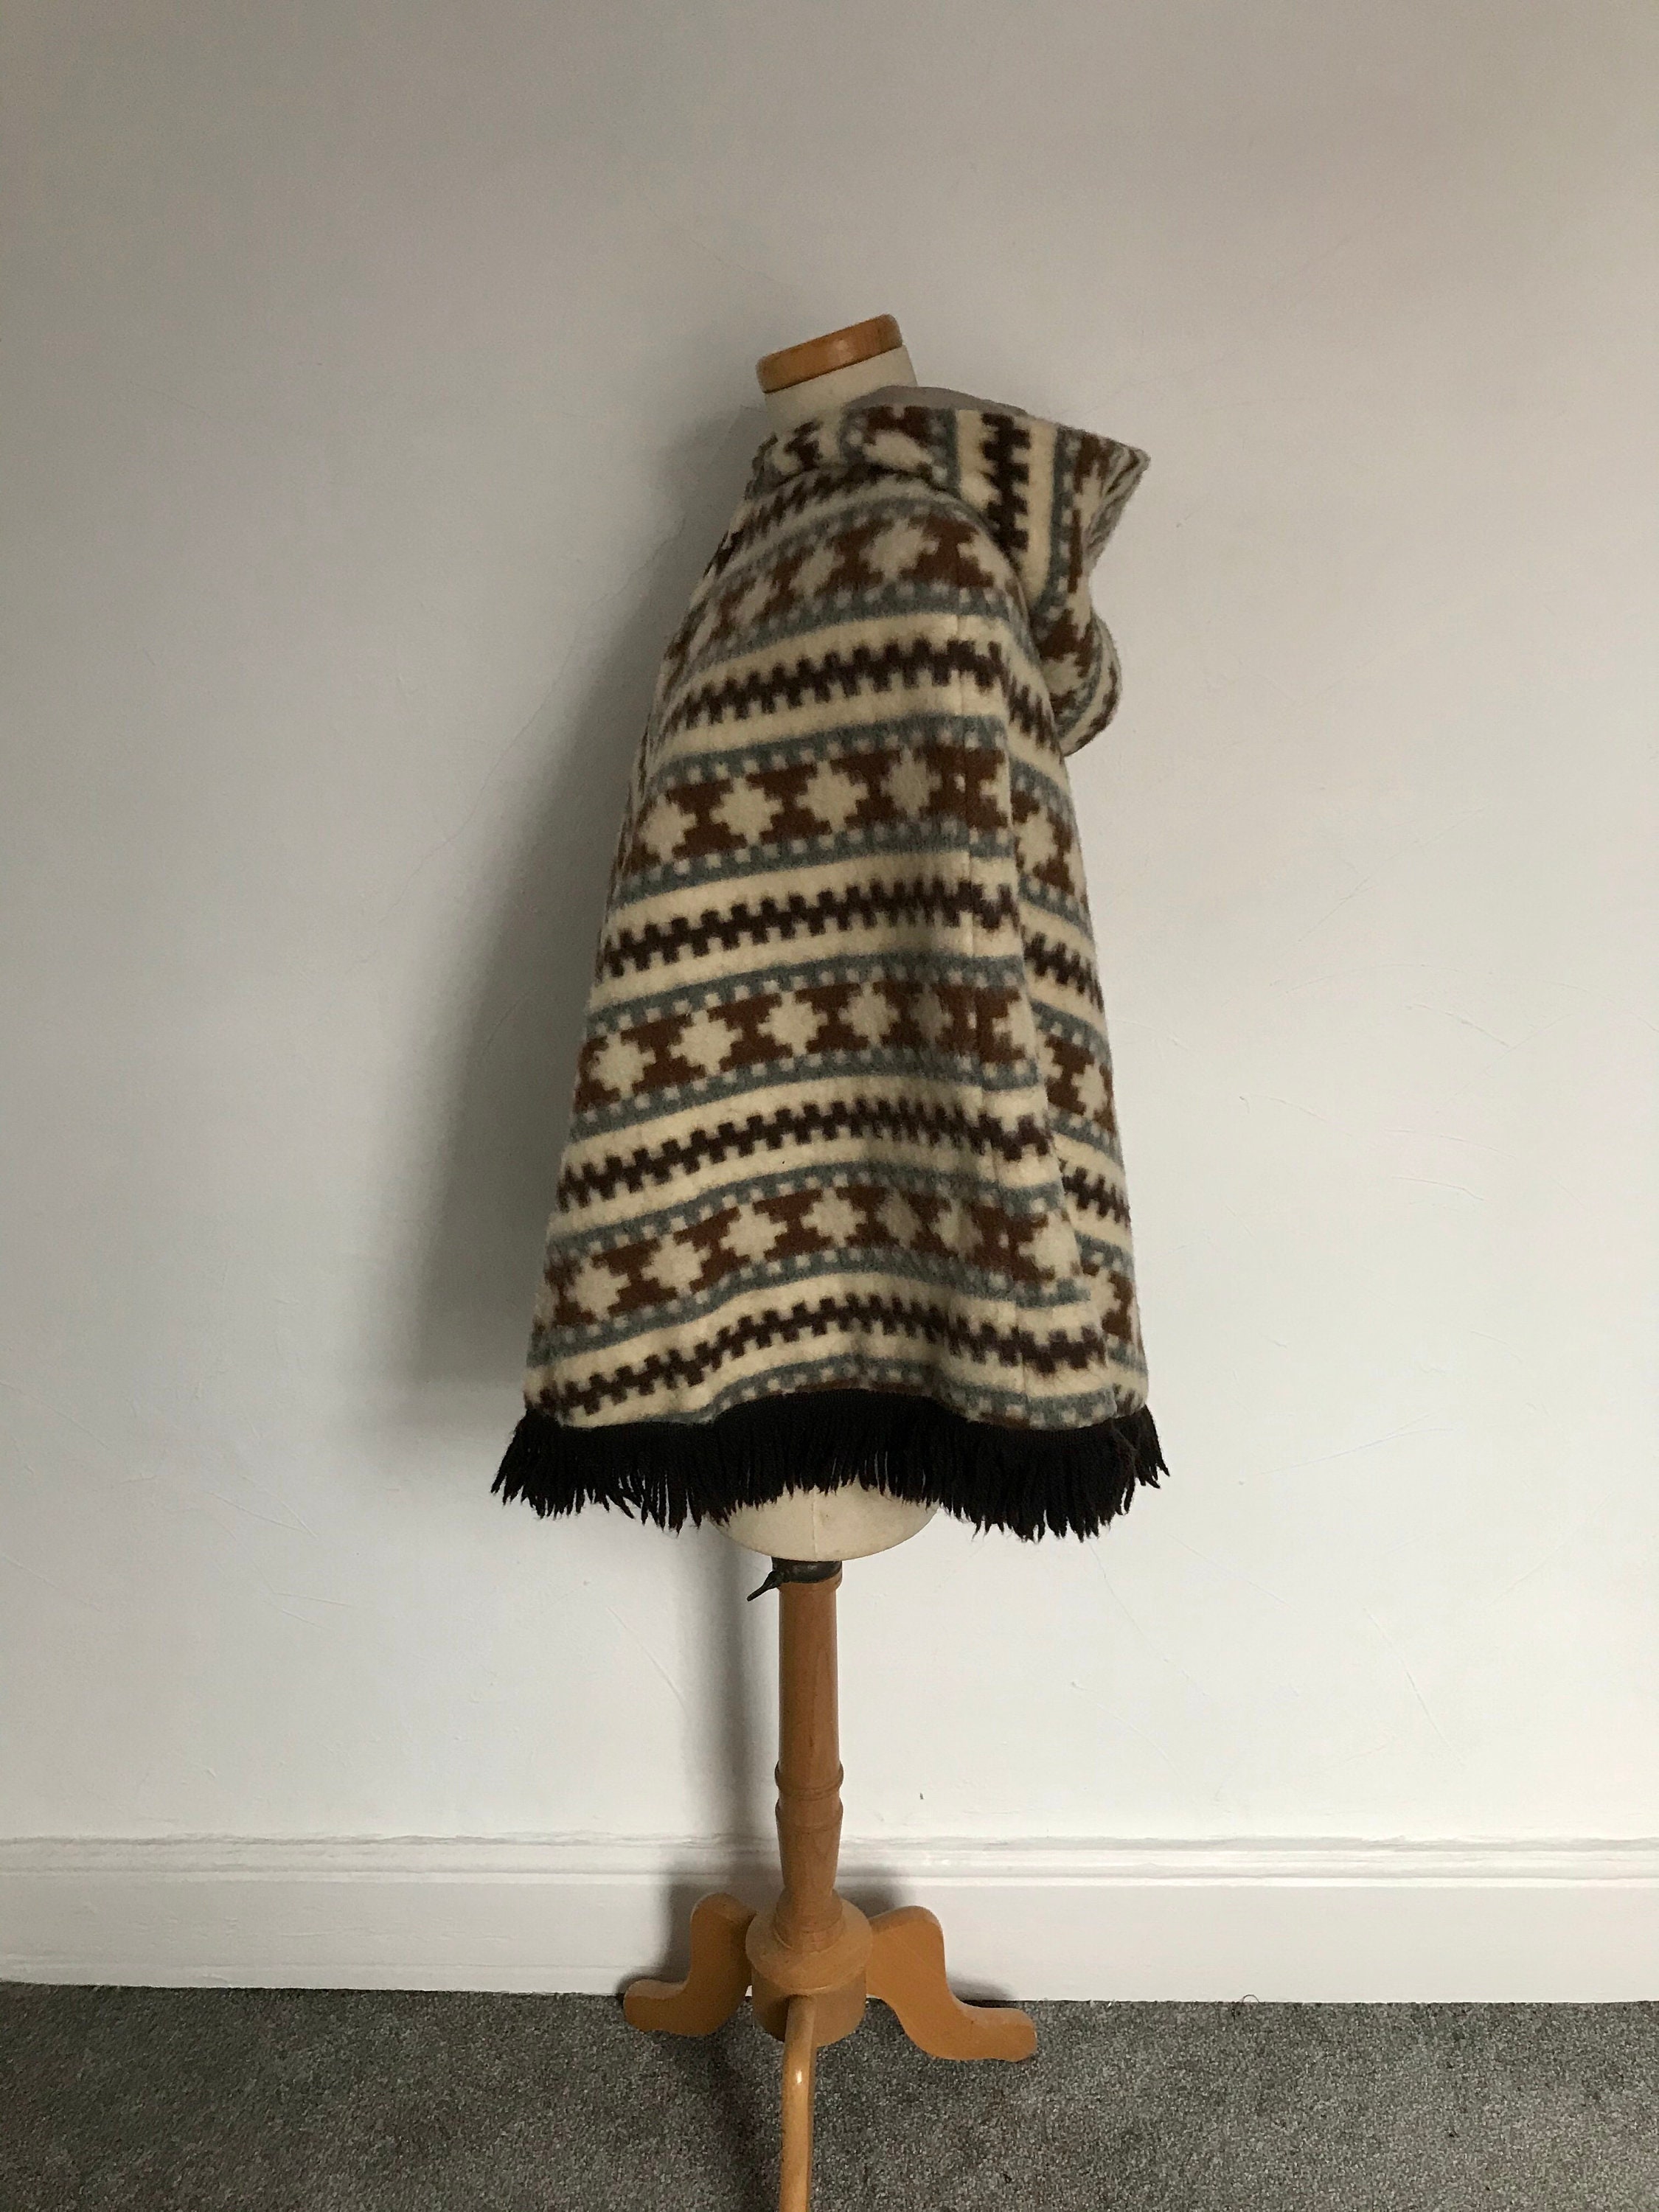 Vintage 1960s Nord Weave Poncho Cloak Cape 60s Norwegian Wool Winter Hooded Top